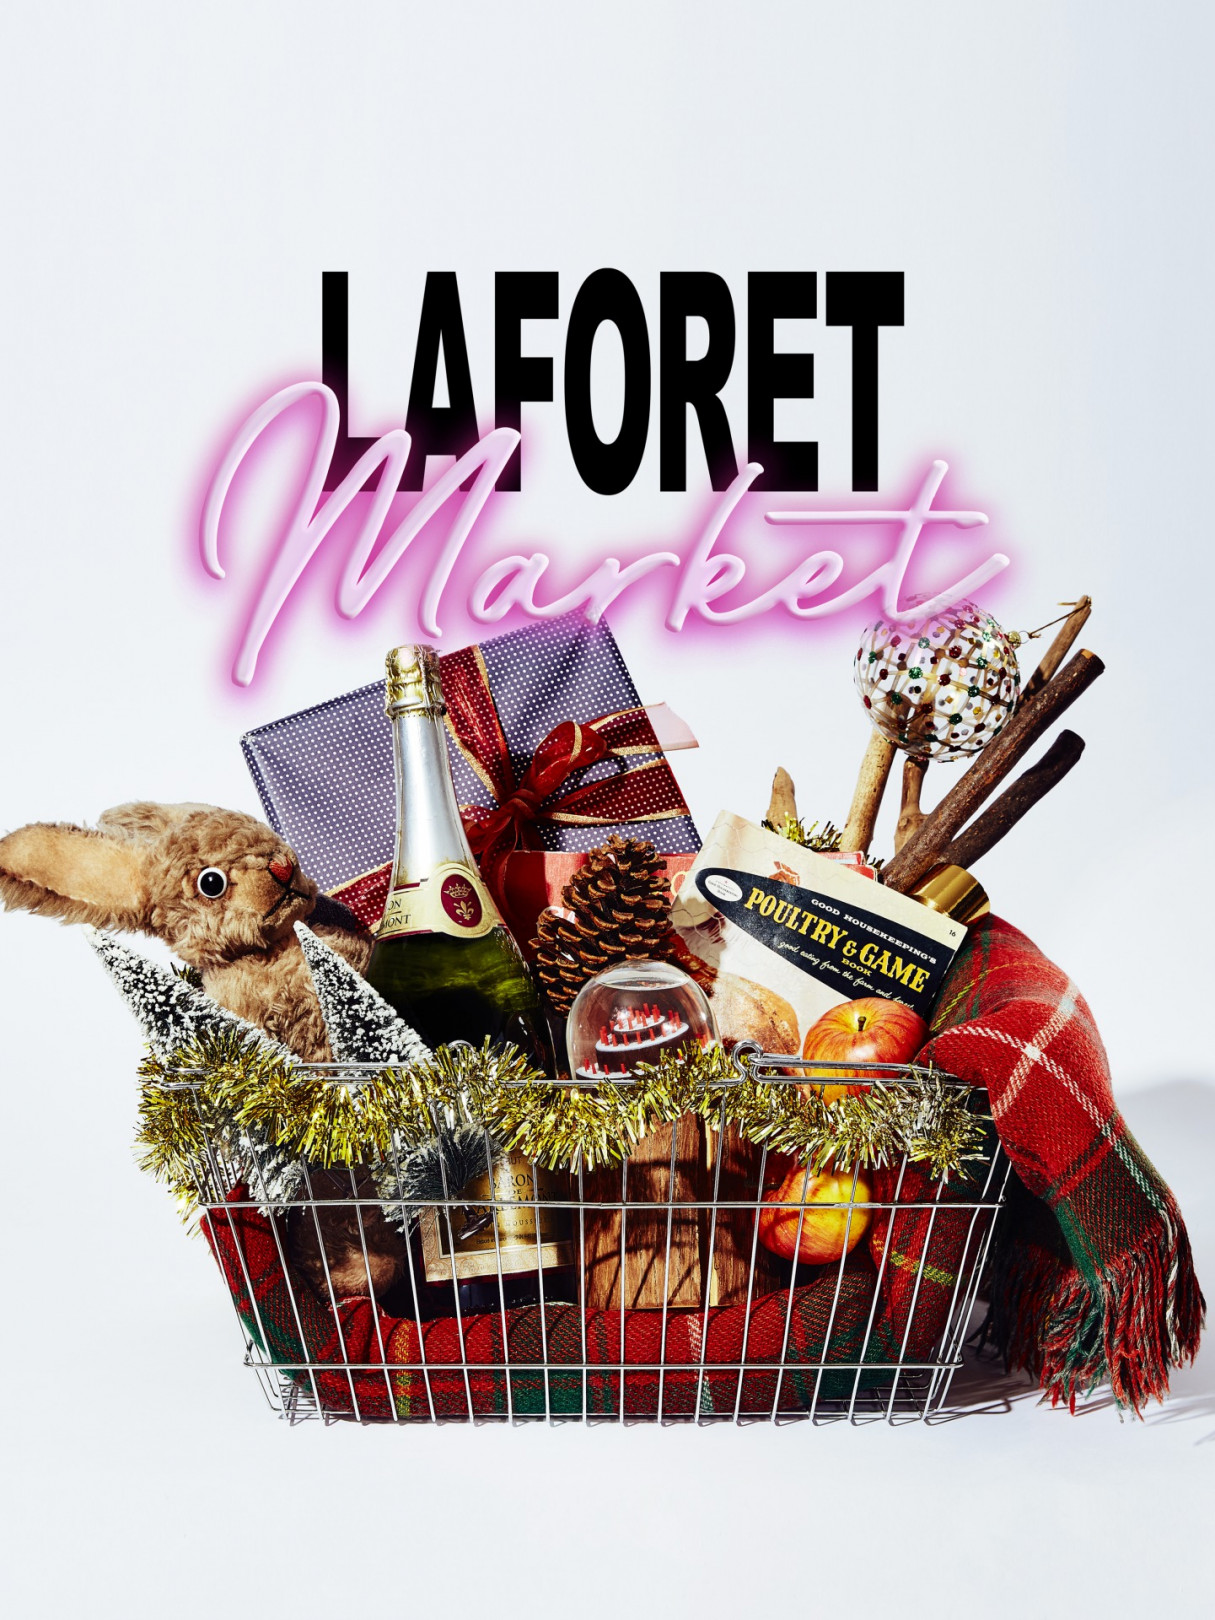 Laforet Market vol.2 “Christmas”